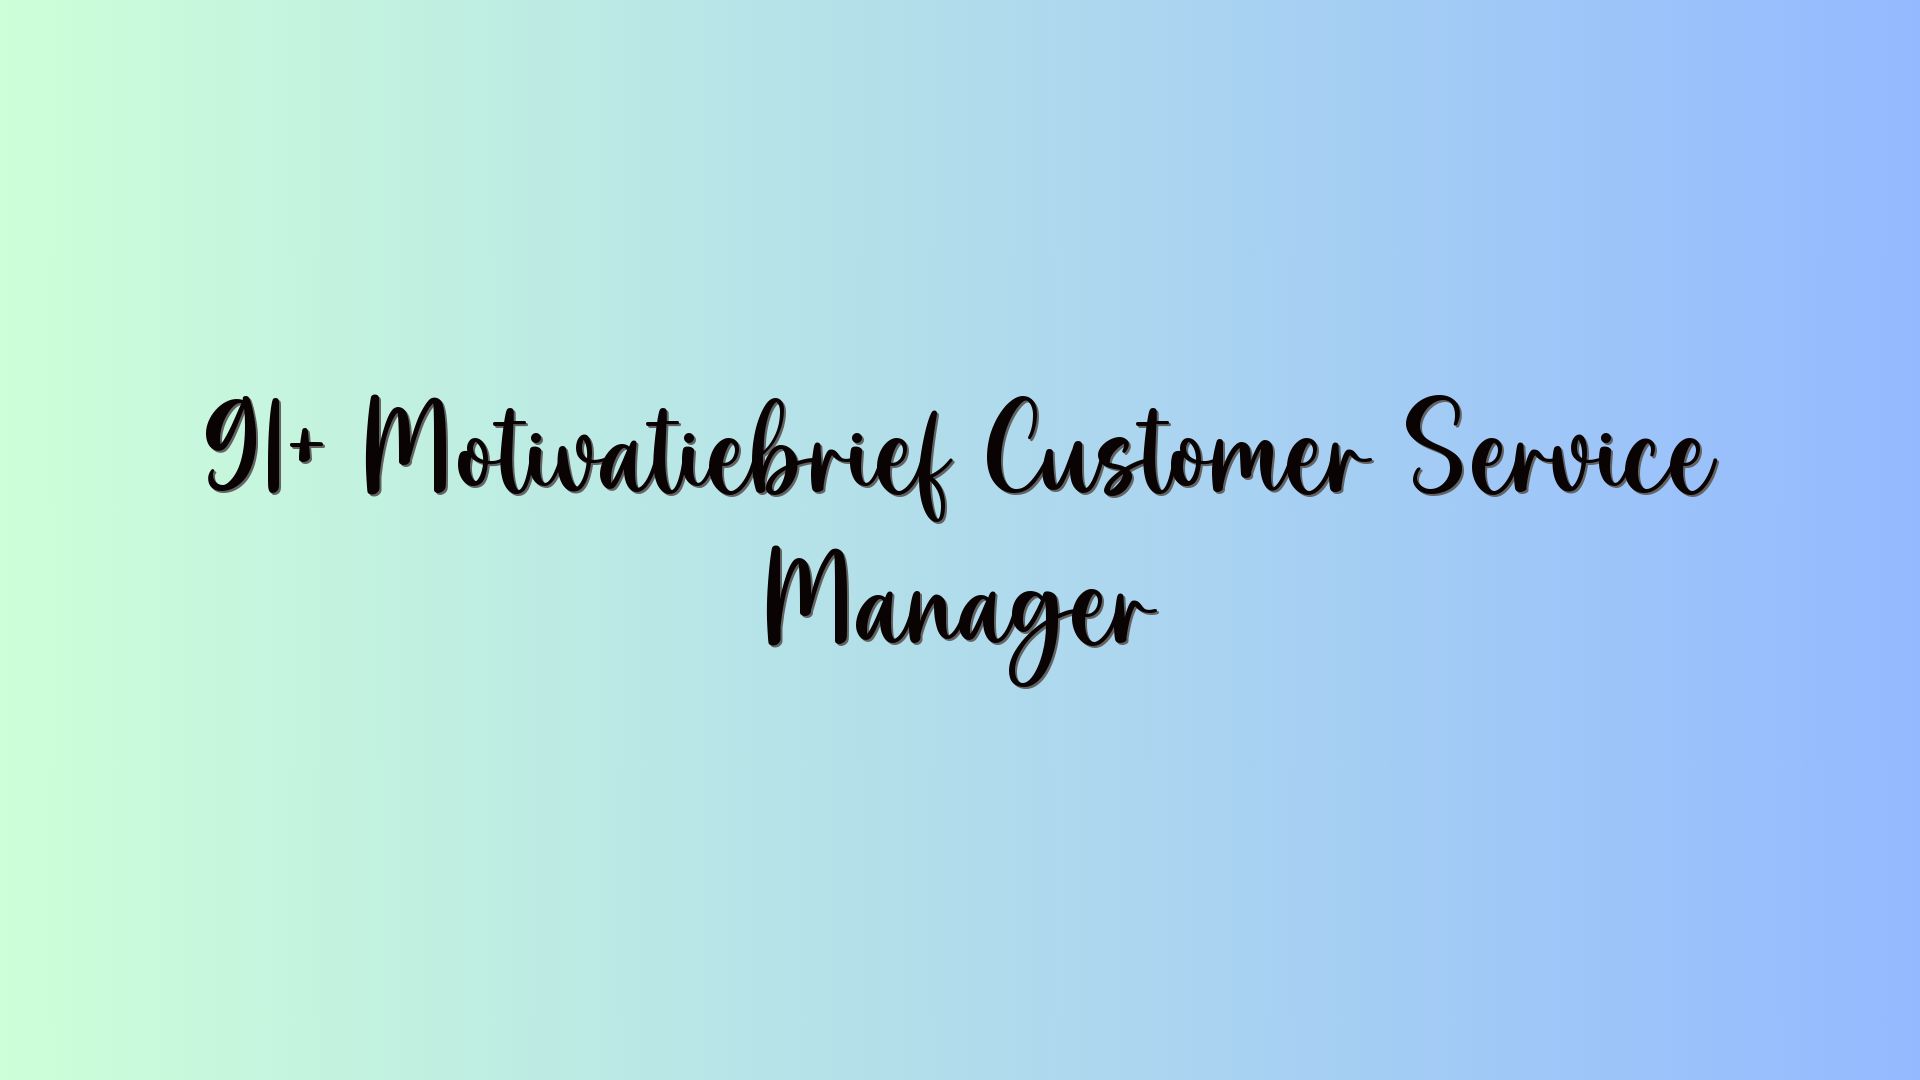 91+ Motivatiebrief Customer Service Manager